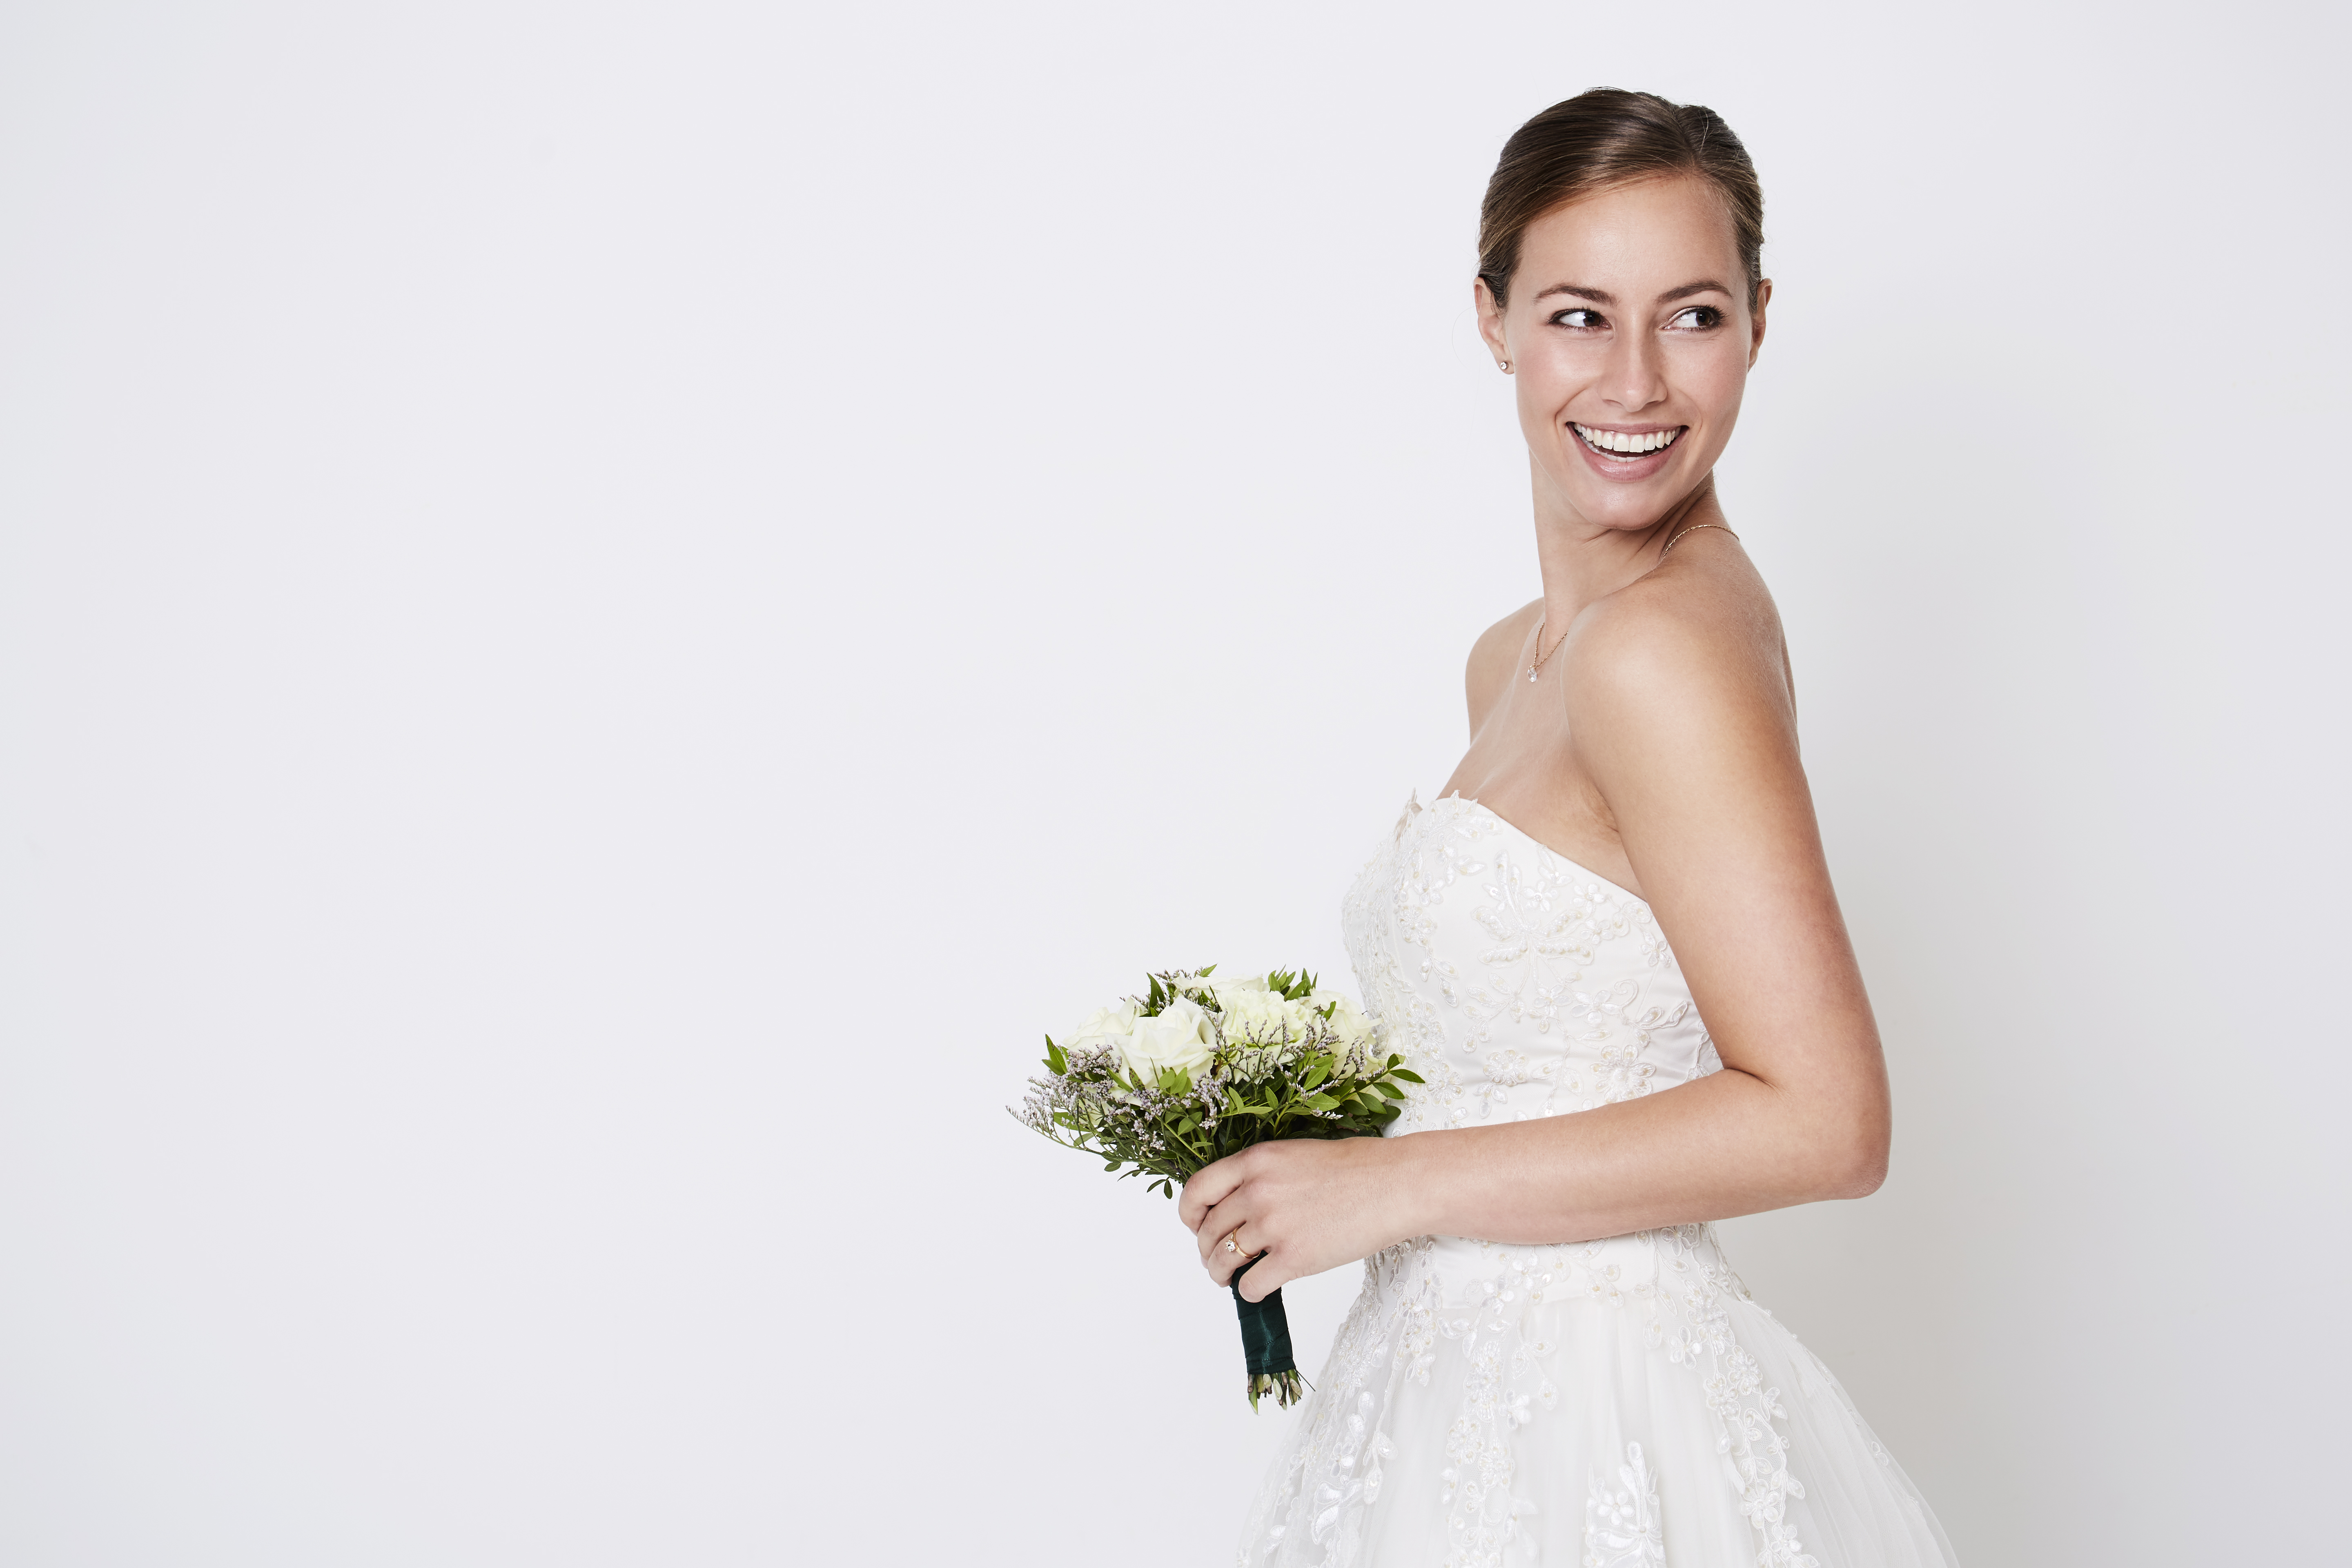 Happy bride | Source: Getty Images